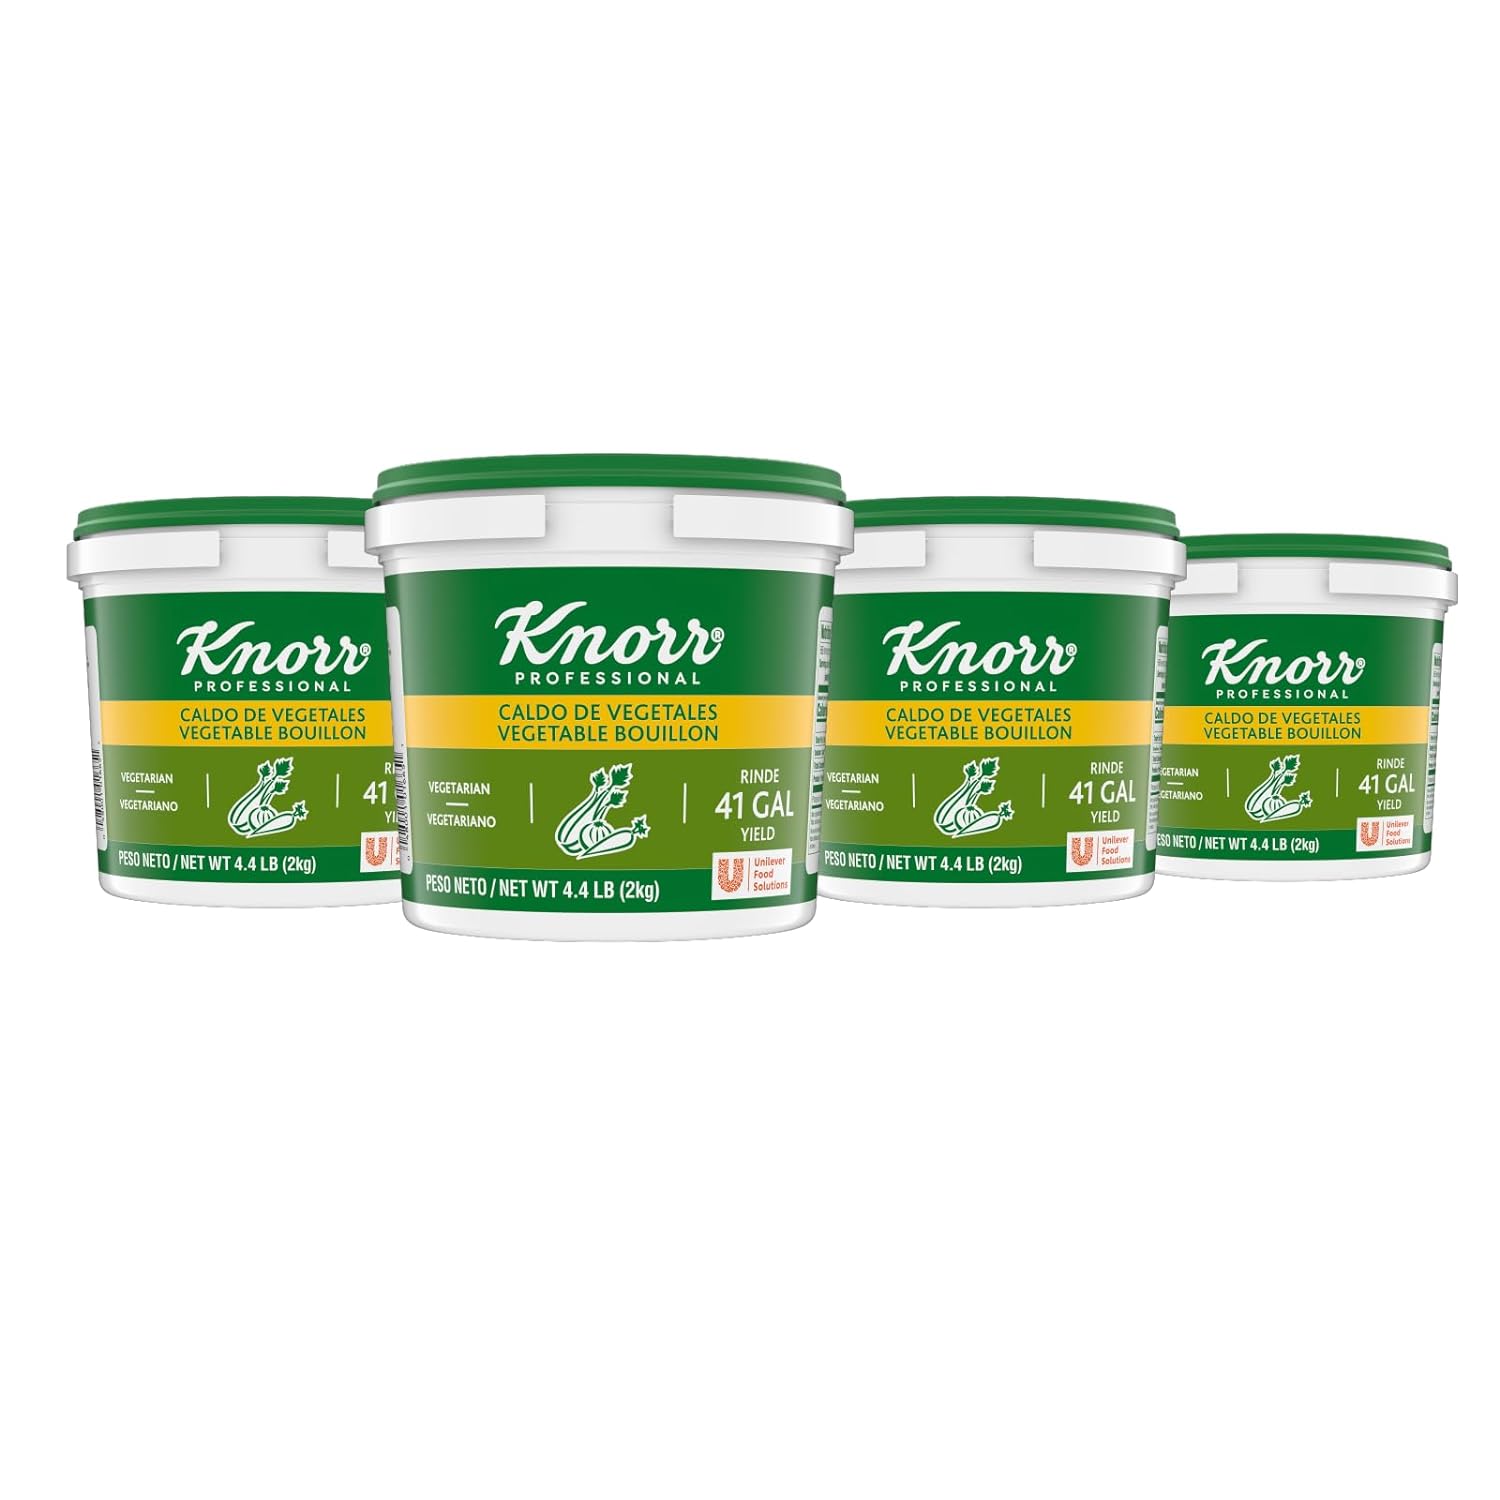 Knorr Professional Caldo de Vegetales, 4.4 Pound -- 4 per case